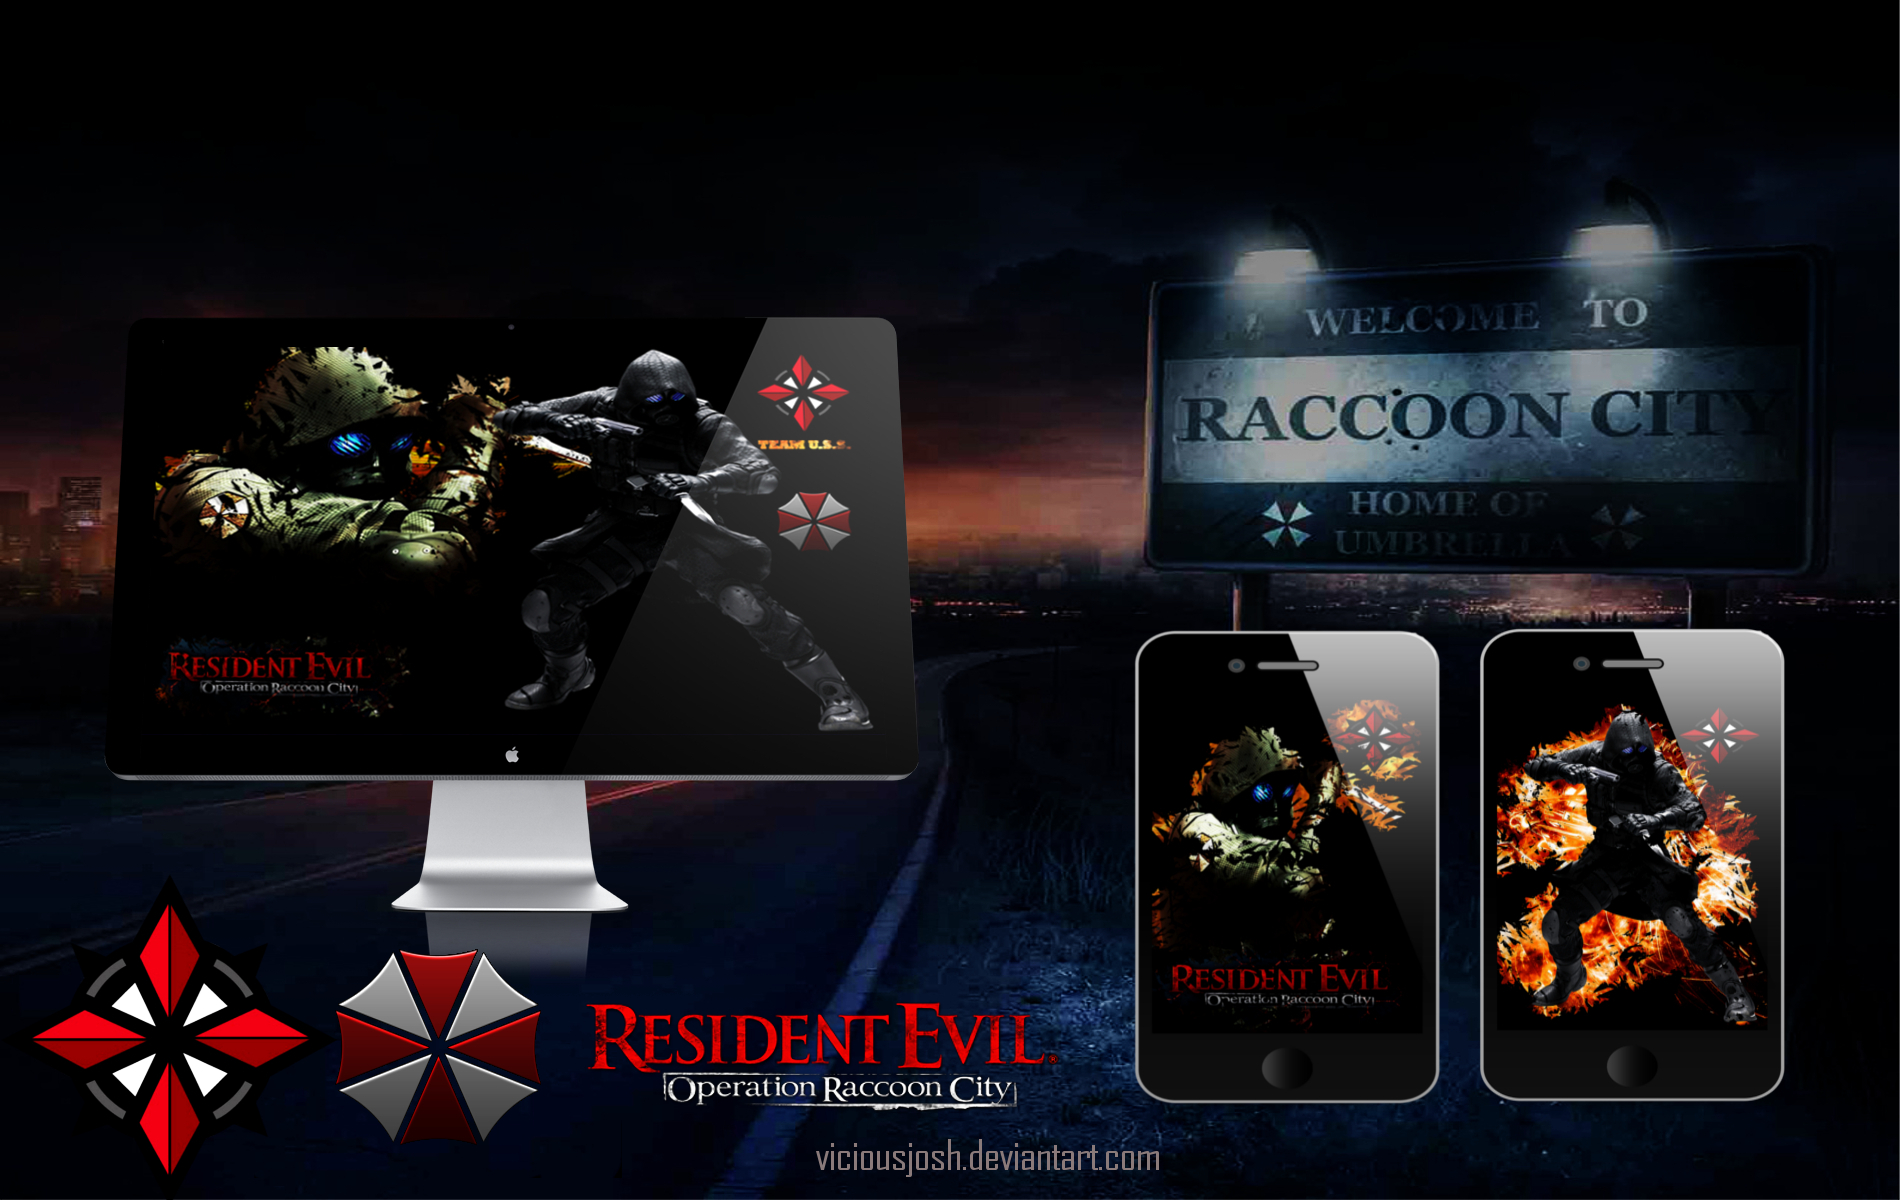 Resident Evil Operation Raccoon City Vector By Viciousjosh